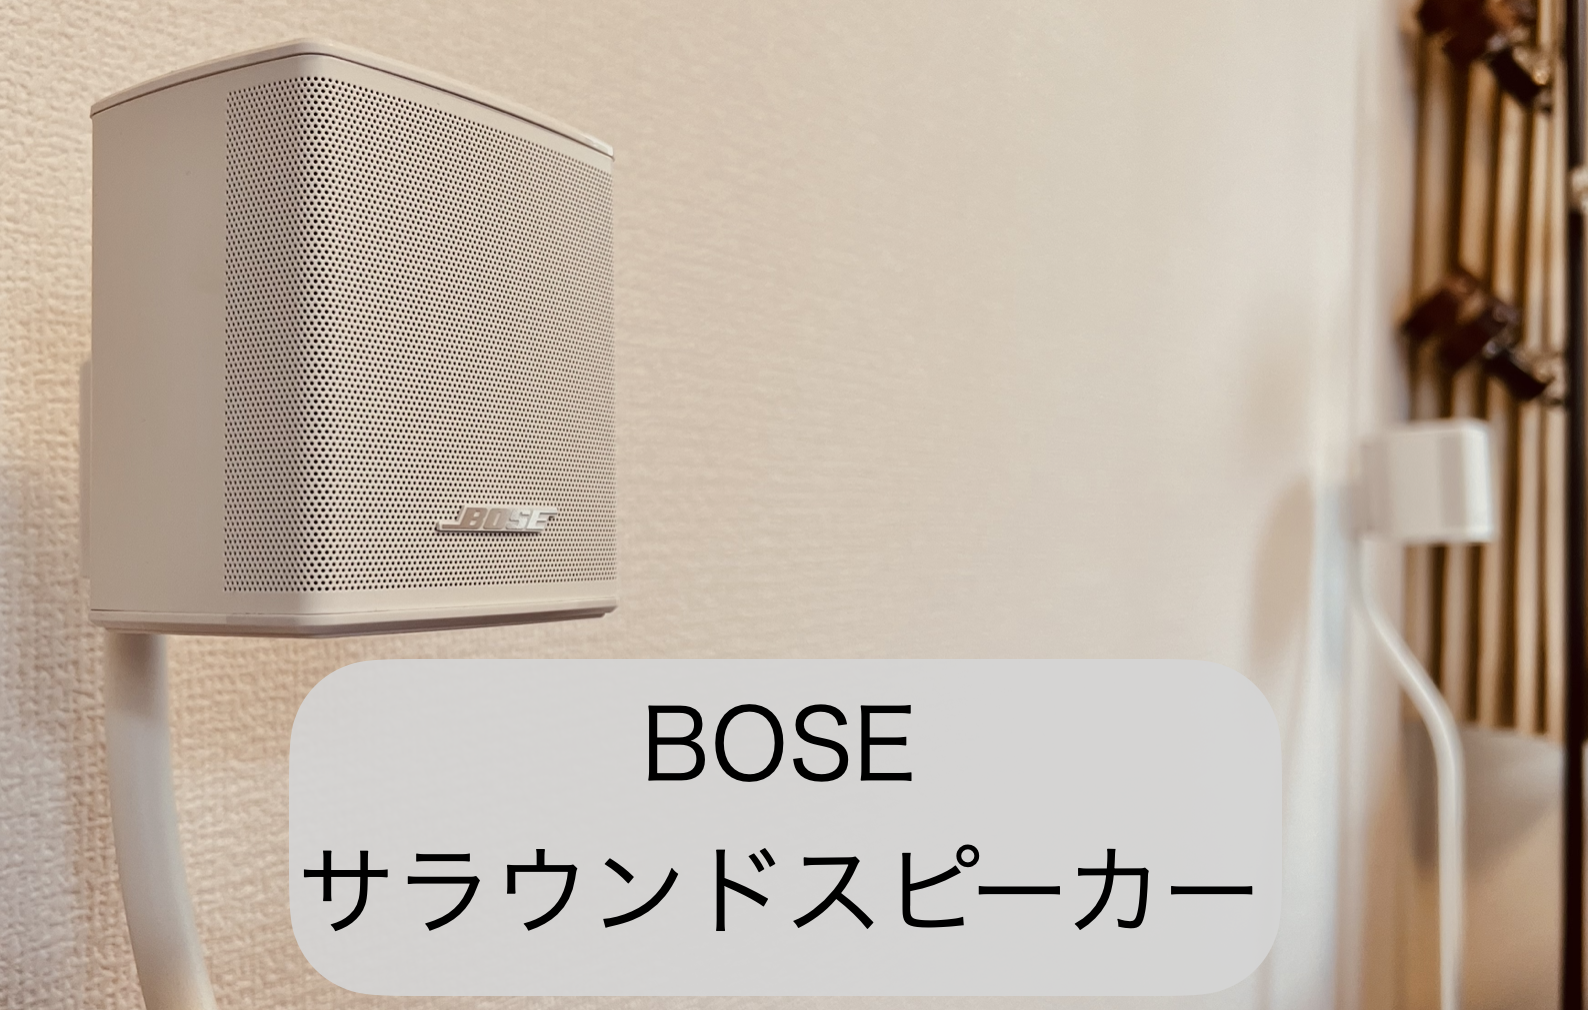 Bose surround speakers ボーズサラウンドスピーカー - スピーカー